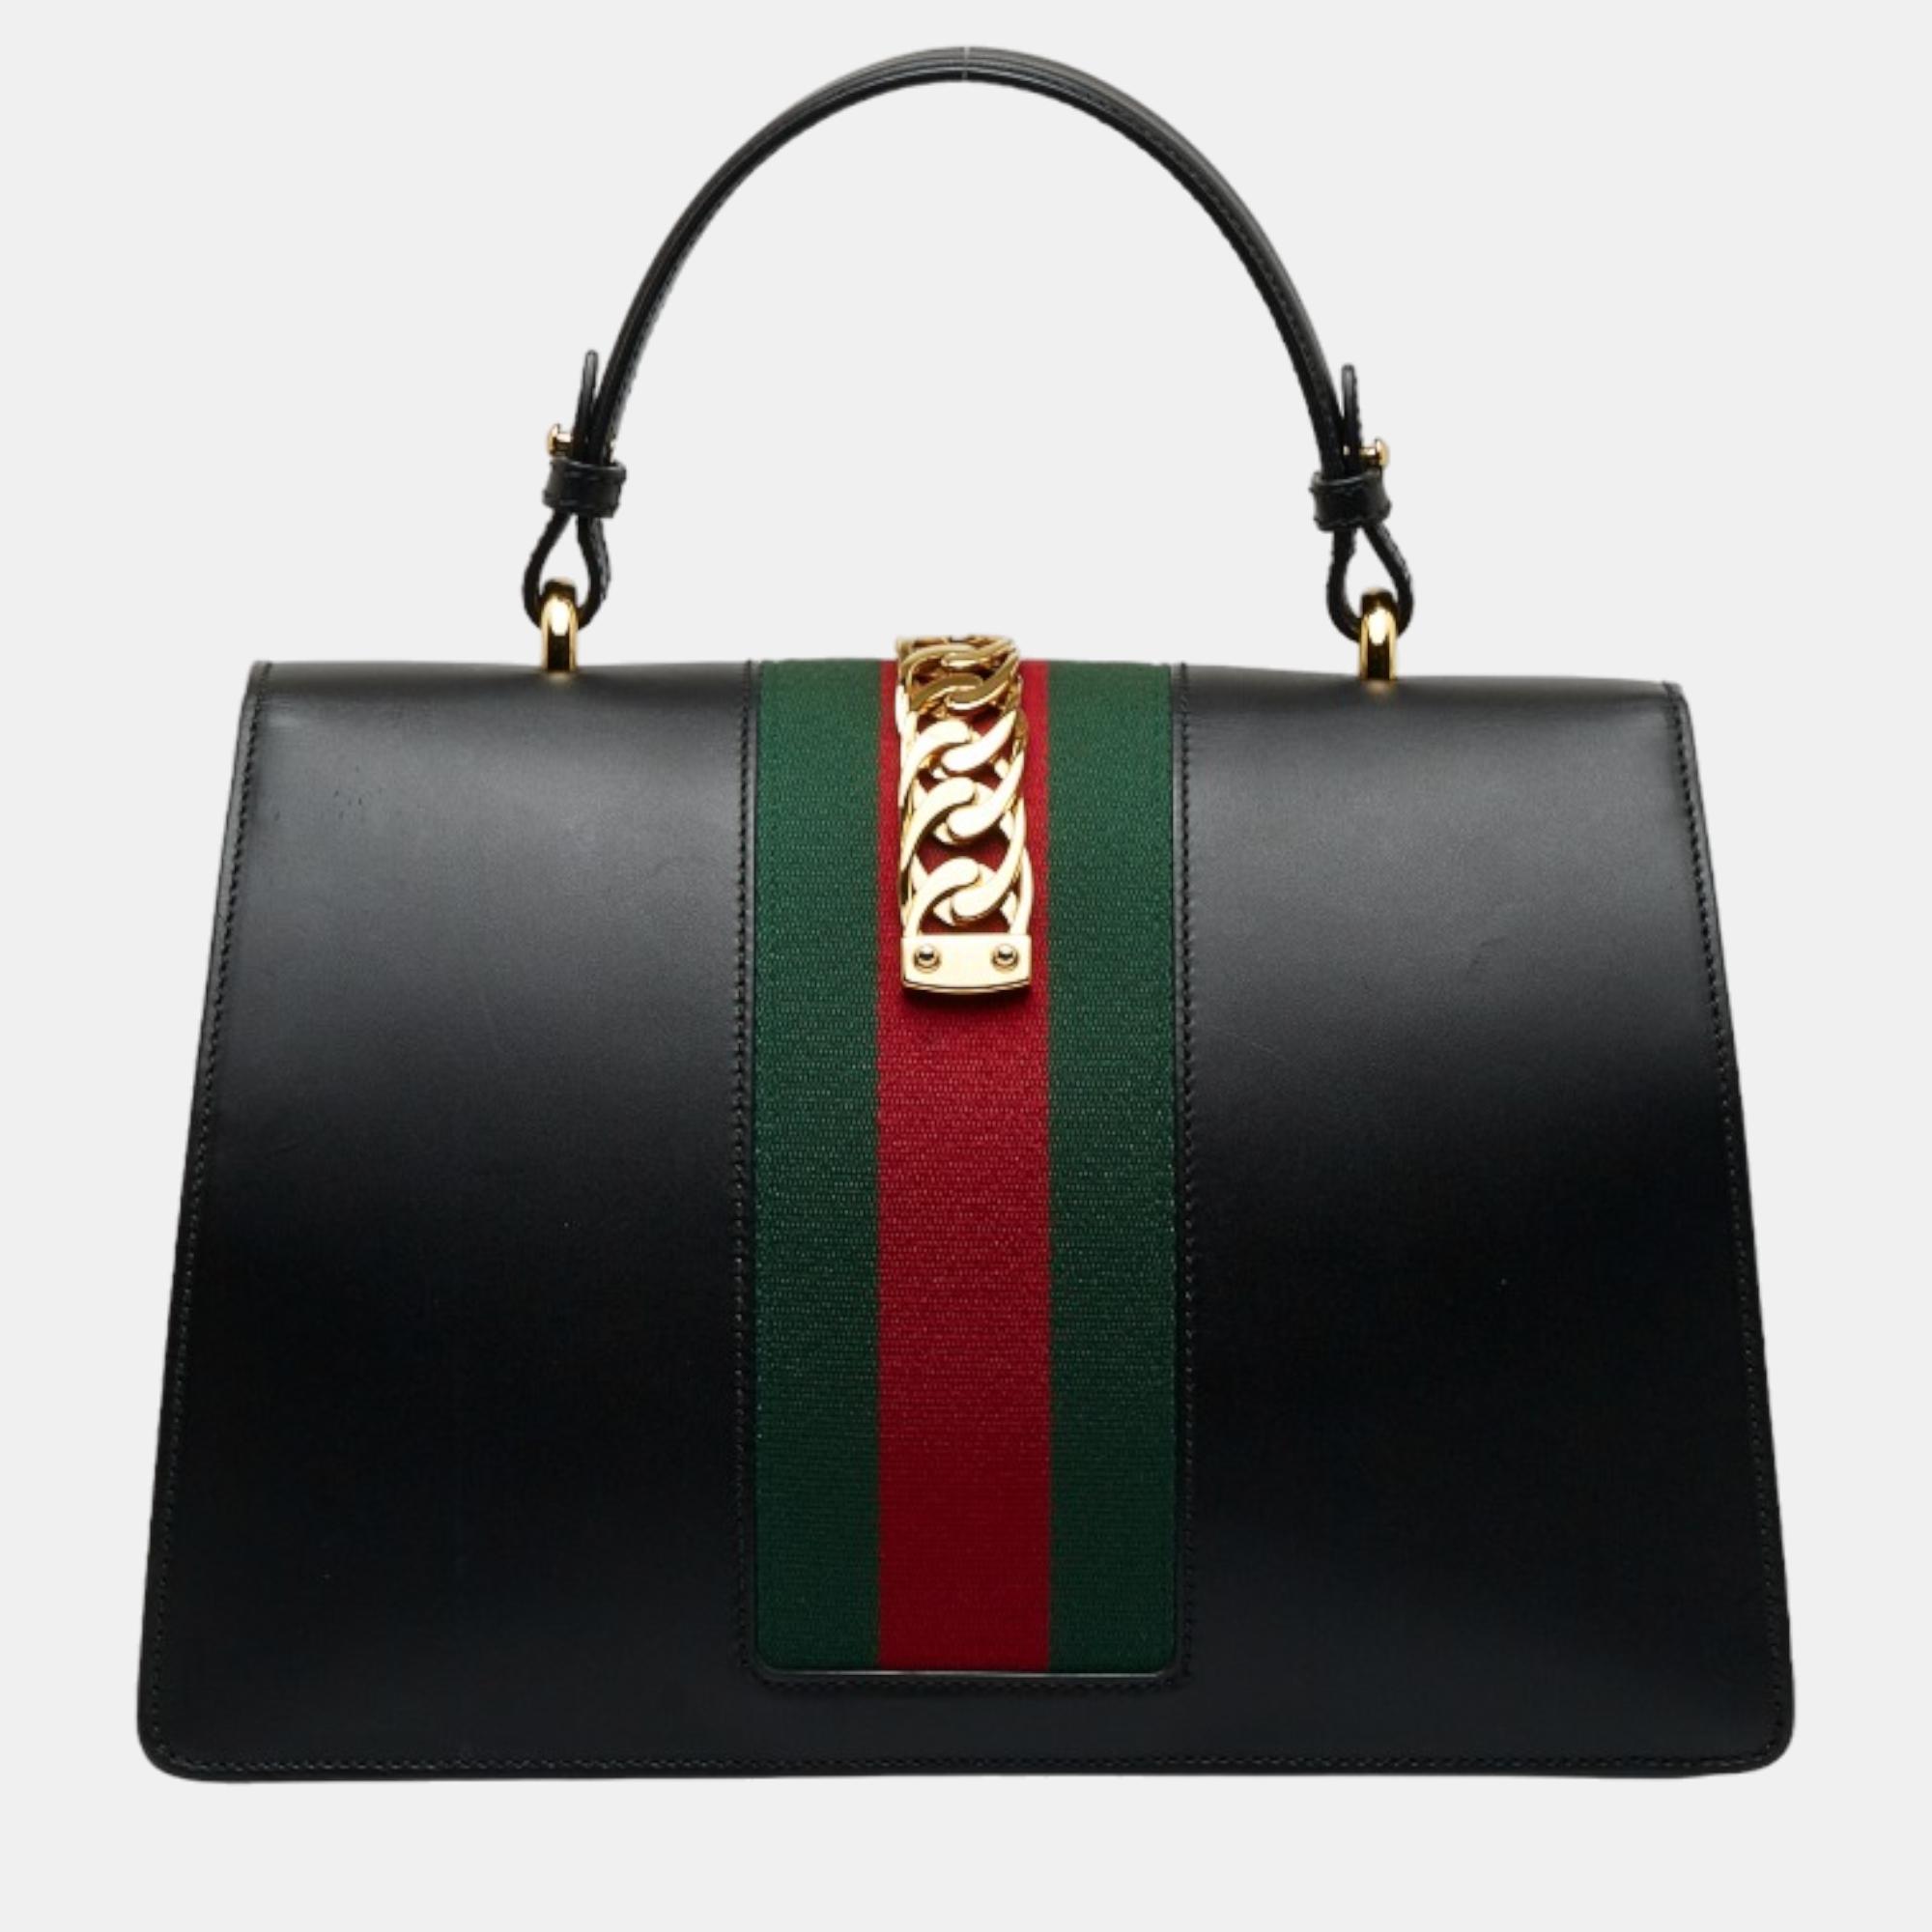 Gucci Black Leather Medium Sylvie Top Handle Bag